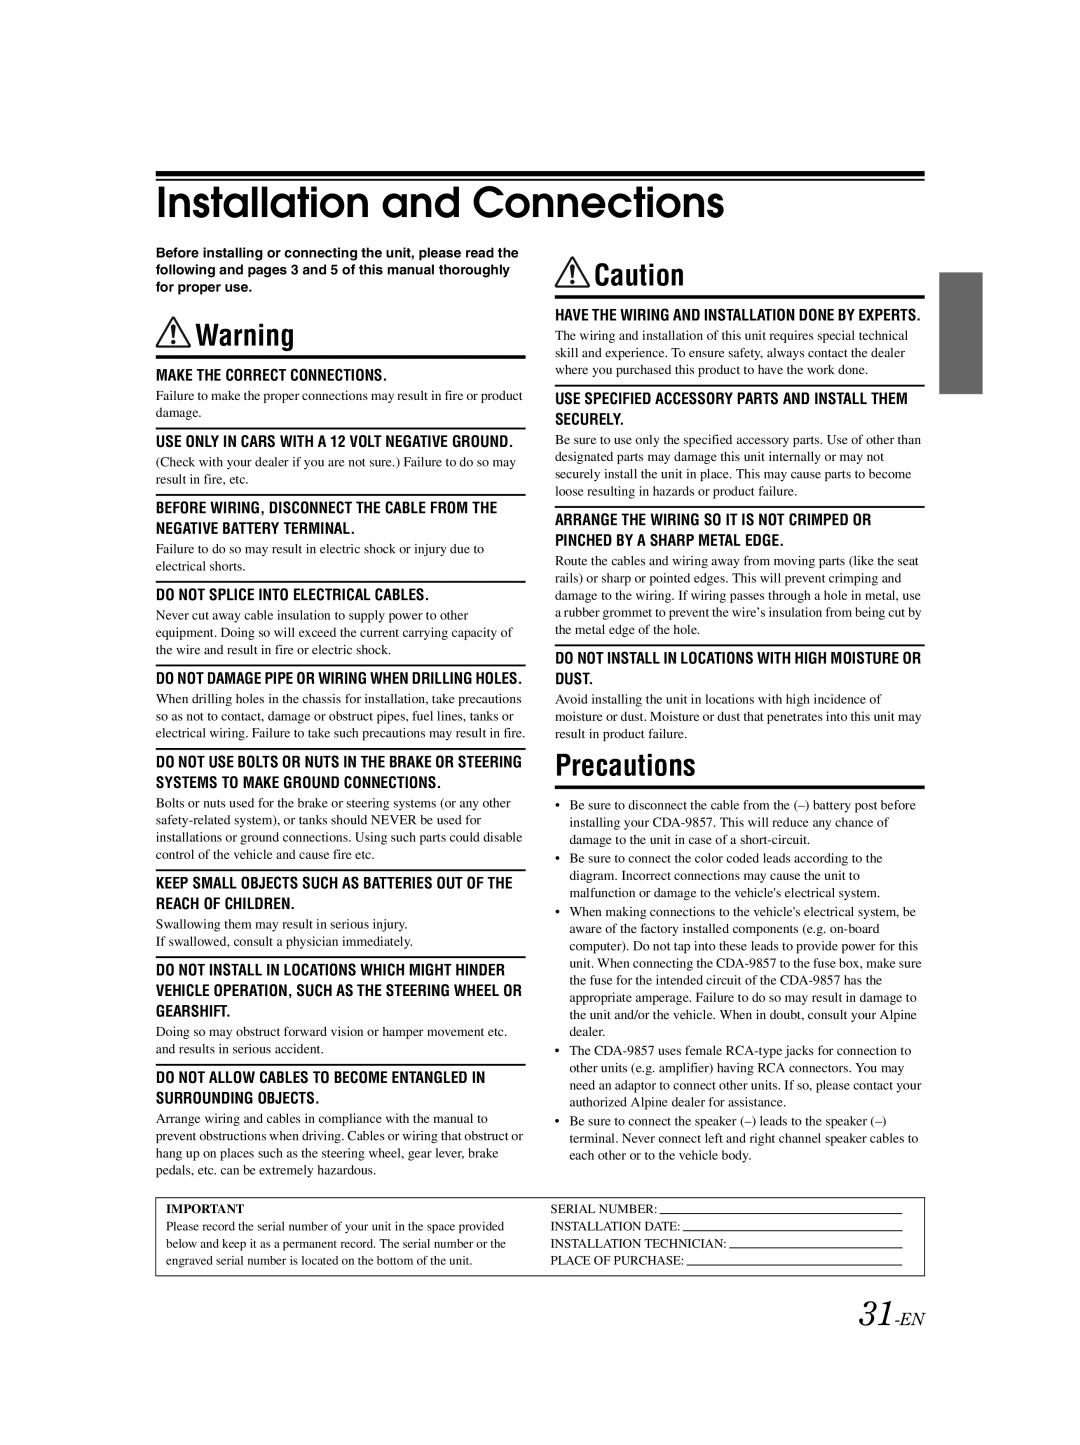 Alpine CDA-9857 owner manual Installation and Connections, Precautions, 31-EN 